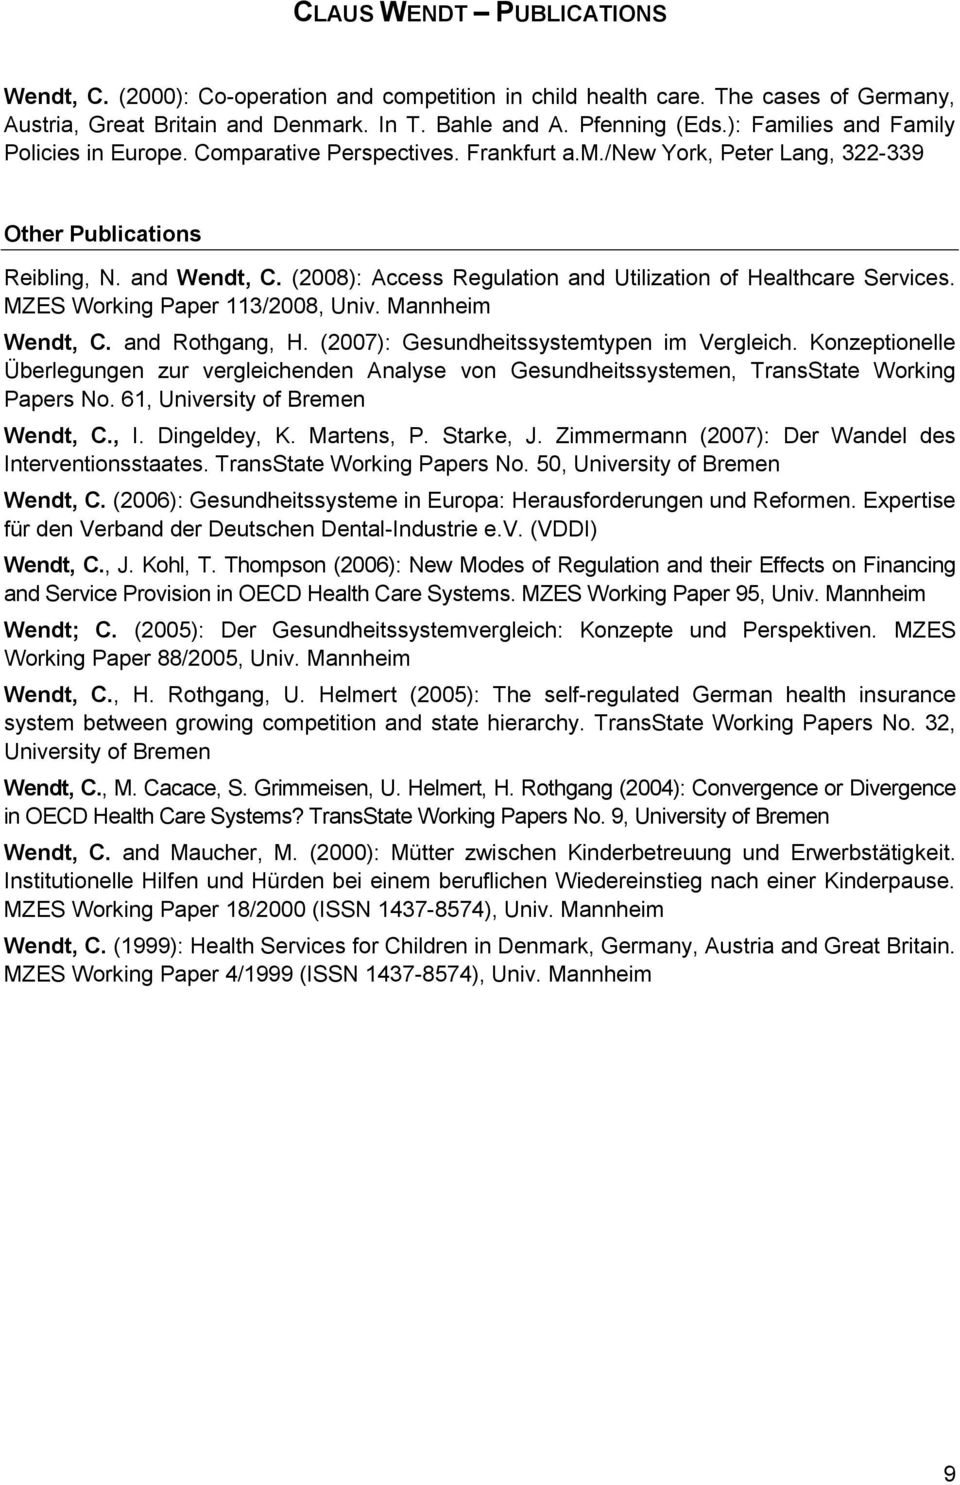 (2008): Access Regulation and Utilization of Healthcare Services. MZES Working Paper 113/2008, Univ. Mannheim Wendt, C. and Rothgang, H. (2007): Gesundheitssystemtypen im Vergleich.